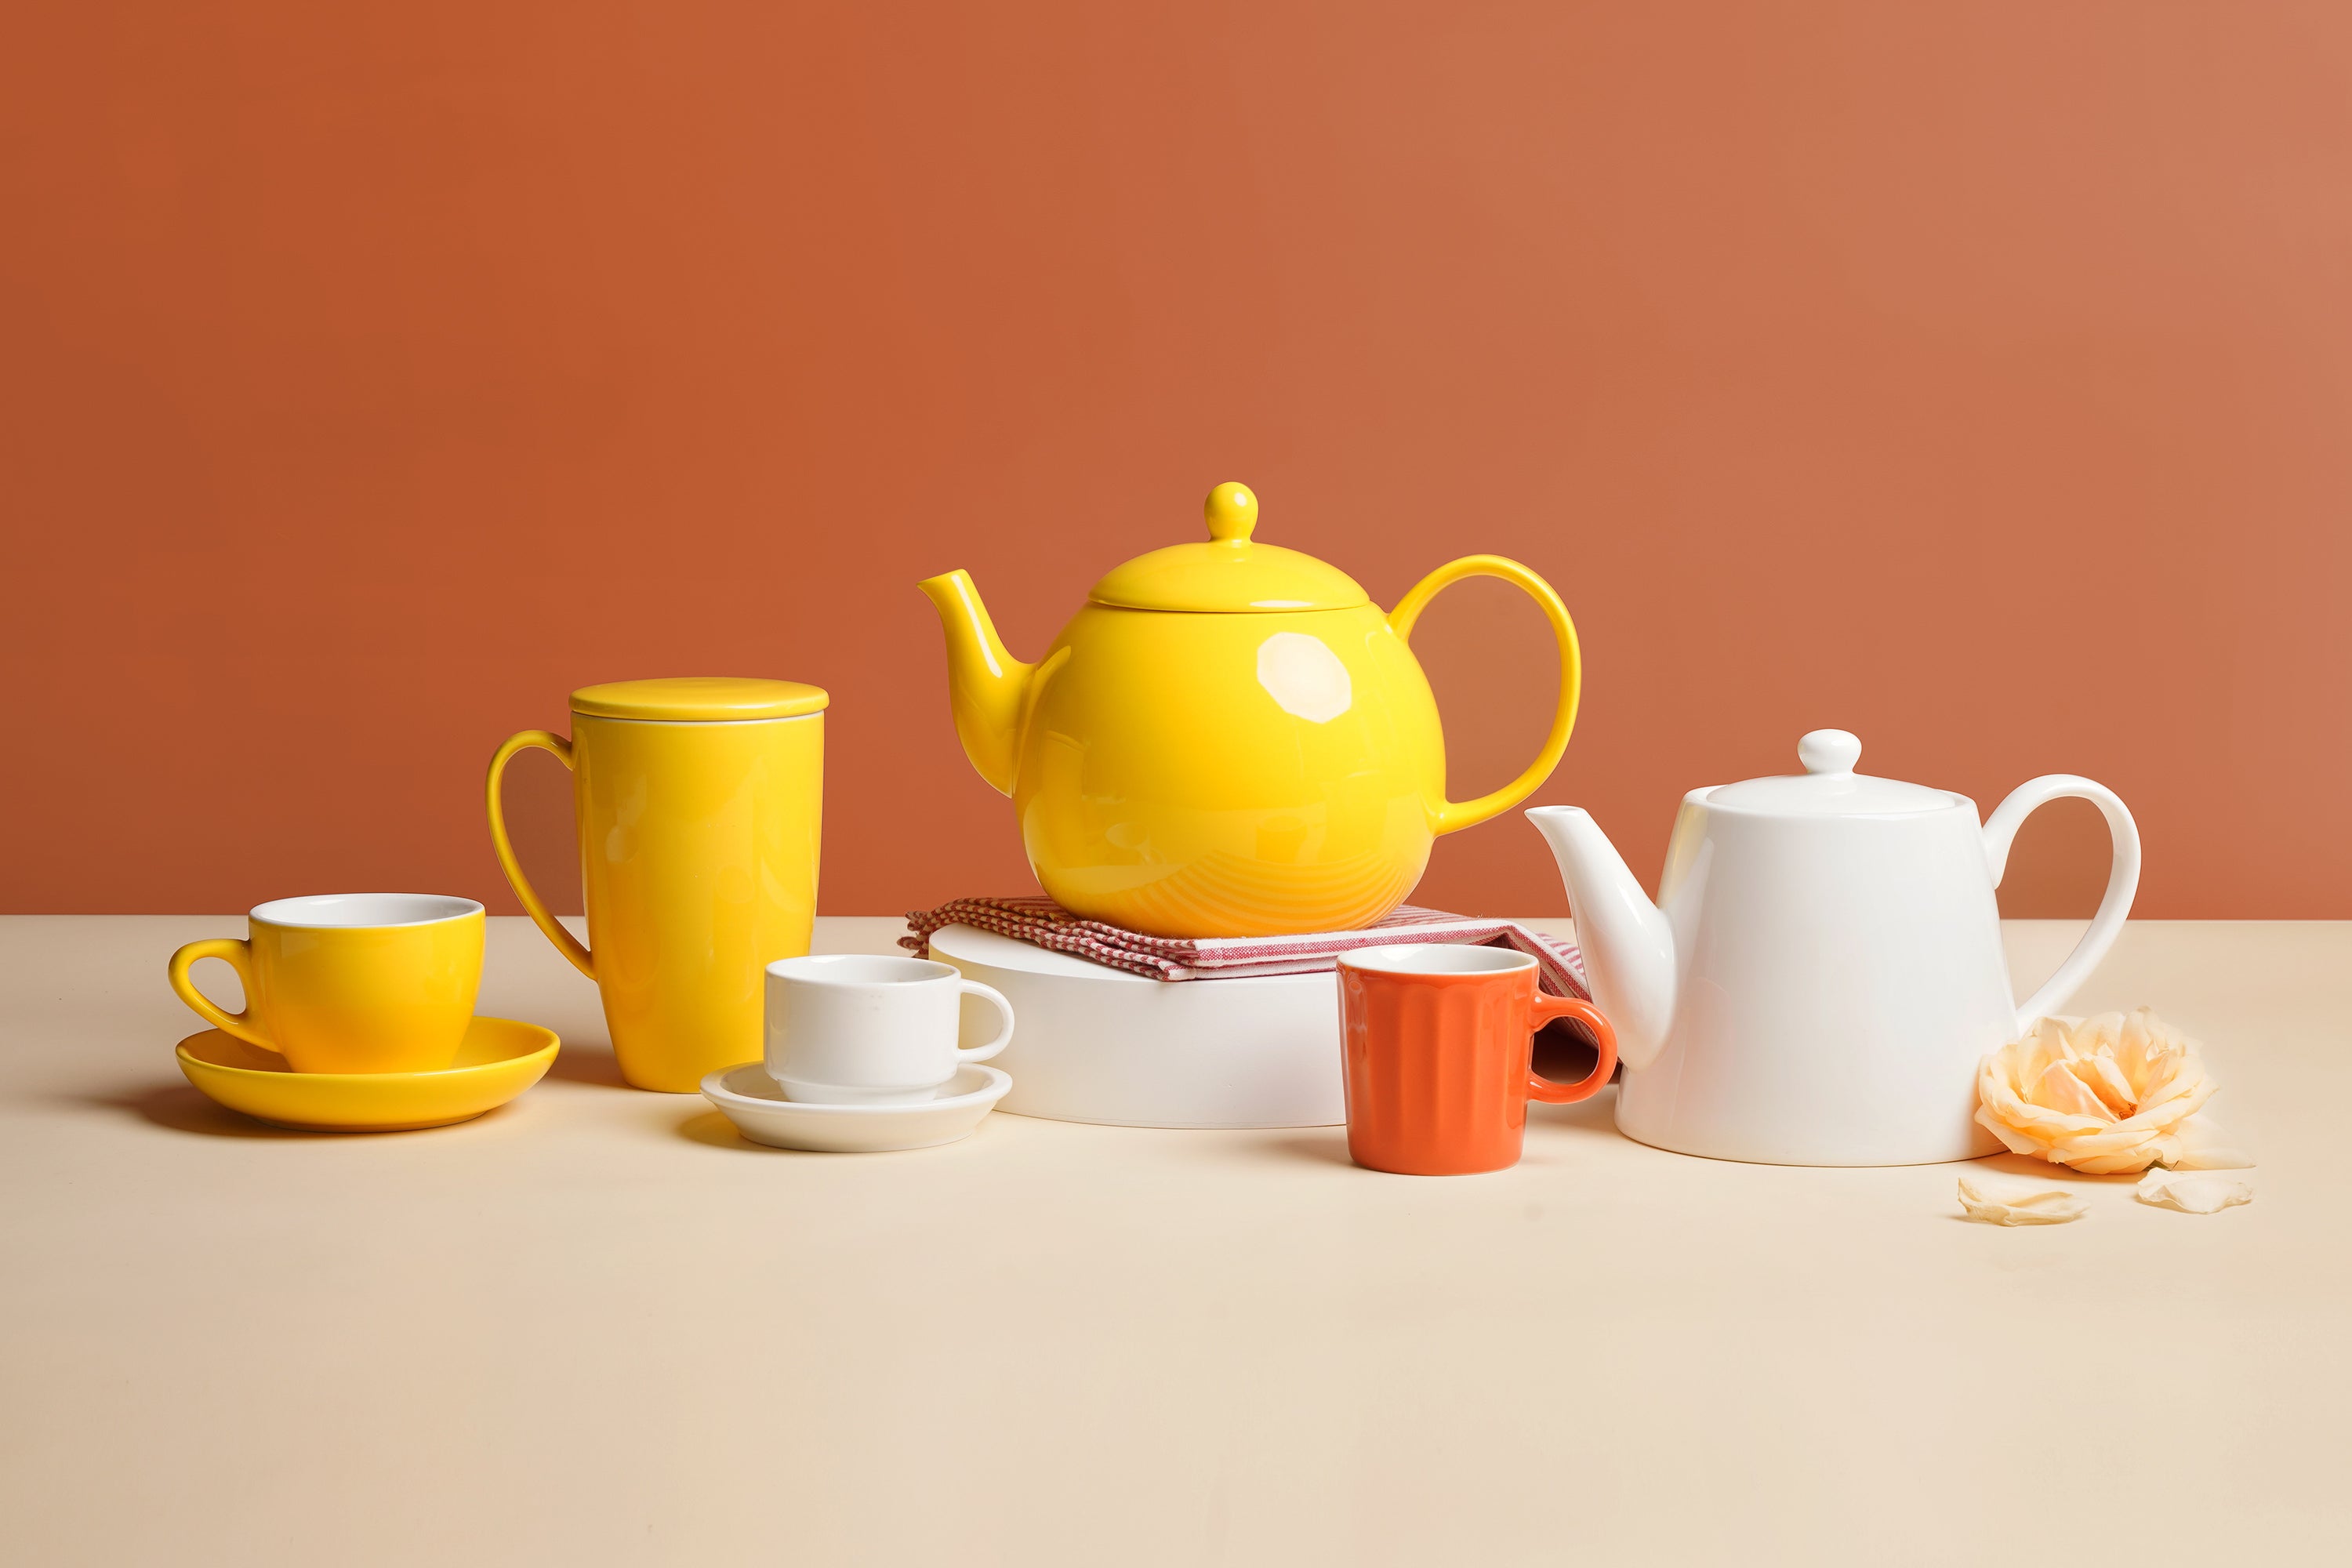 Sweese 2.5-fl oz Ceramic Hot Assorted Colors Espresso Cup Set of